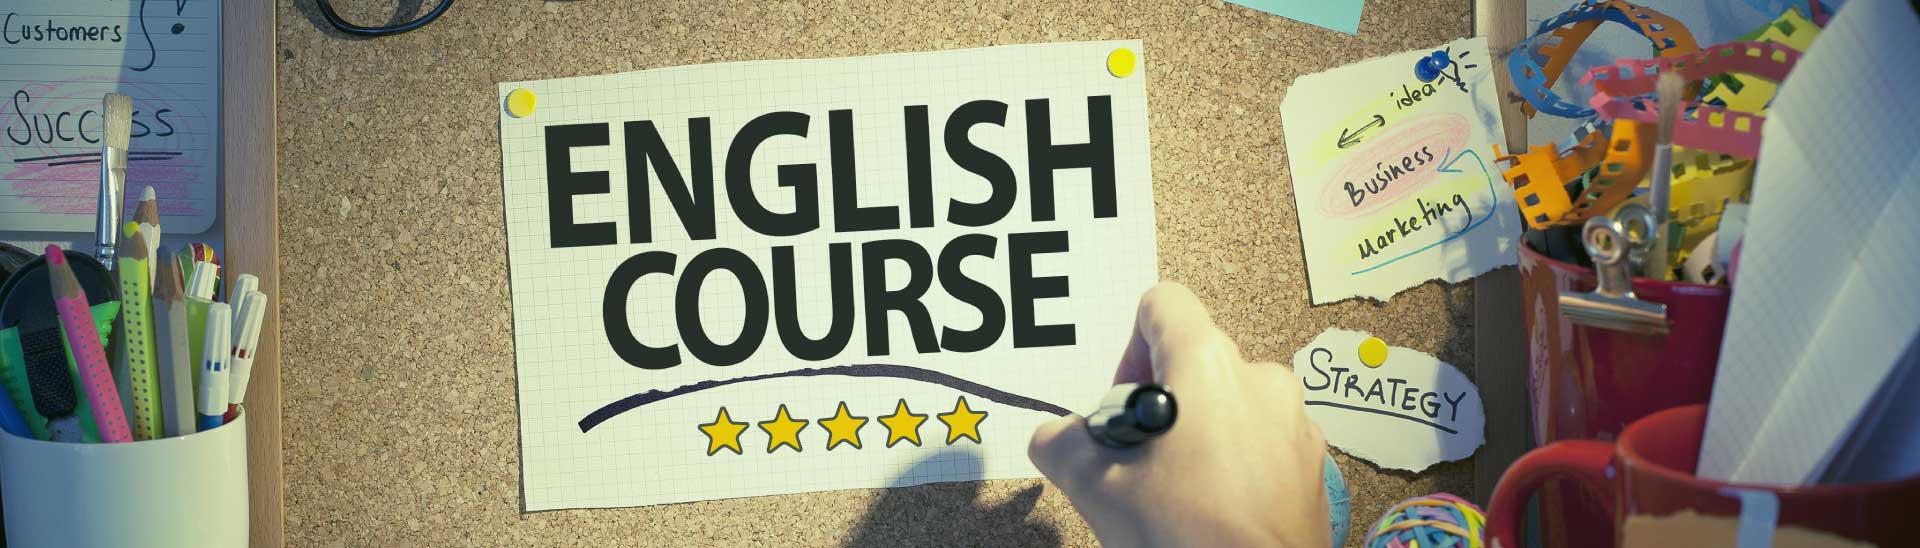 Tips para escoger el mejor curso de inglés.